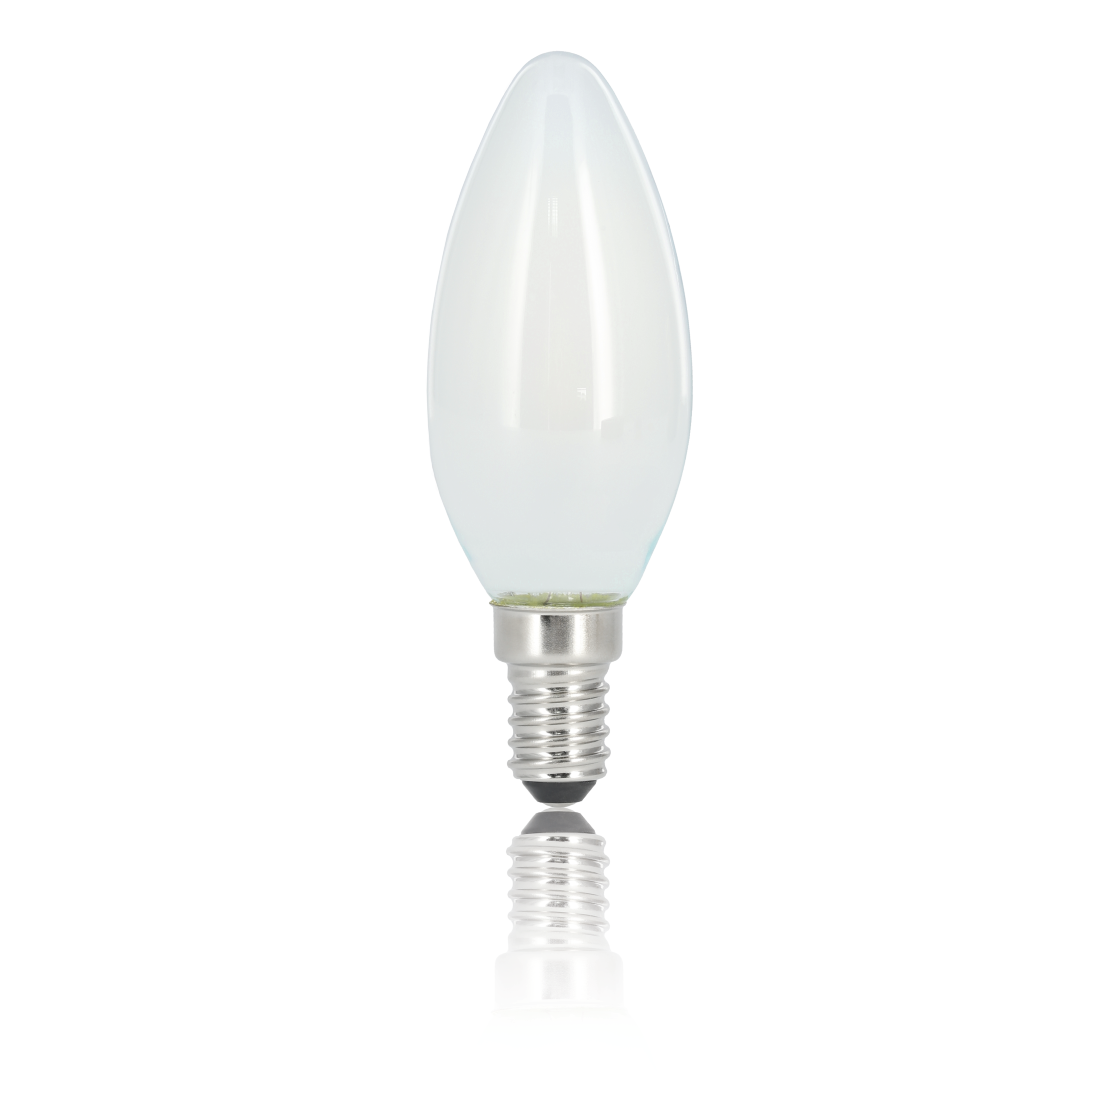 abx2 High-Res Image 2 - Xavax, Ampoule filament LED, E14, 250lm remp. 25W, amp. bougie, mate, blc chd